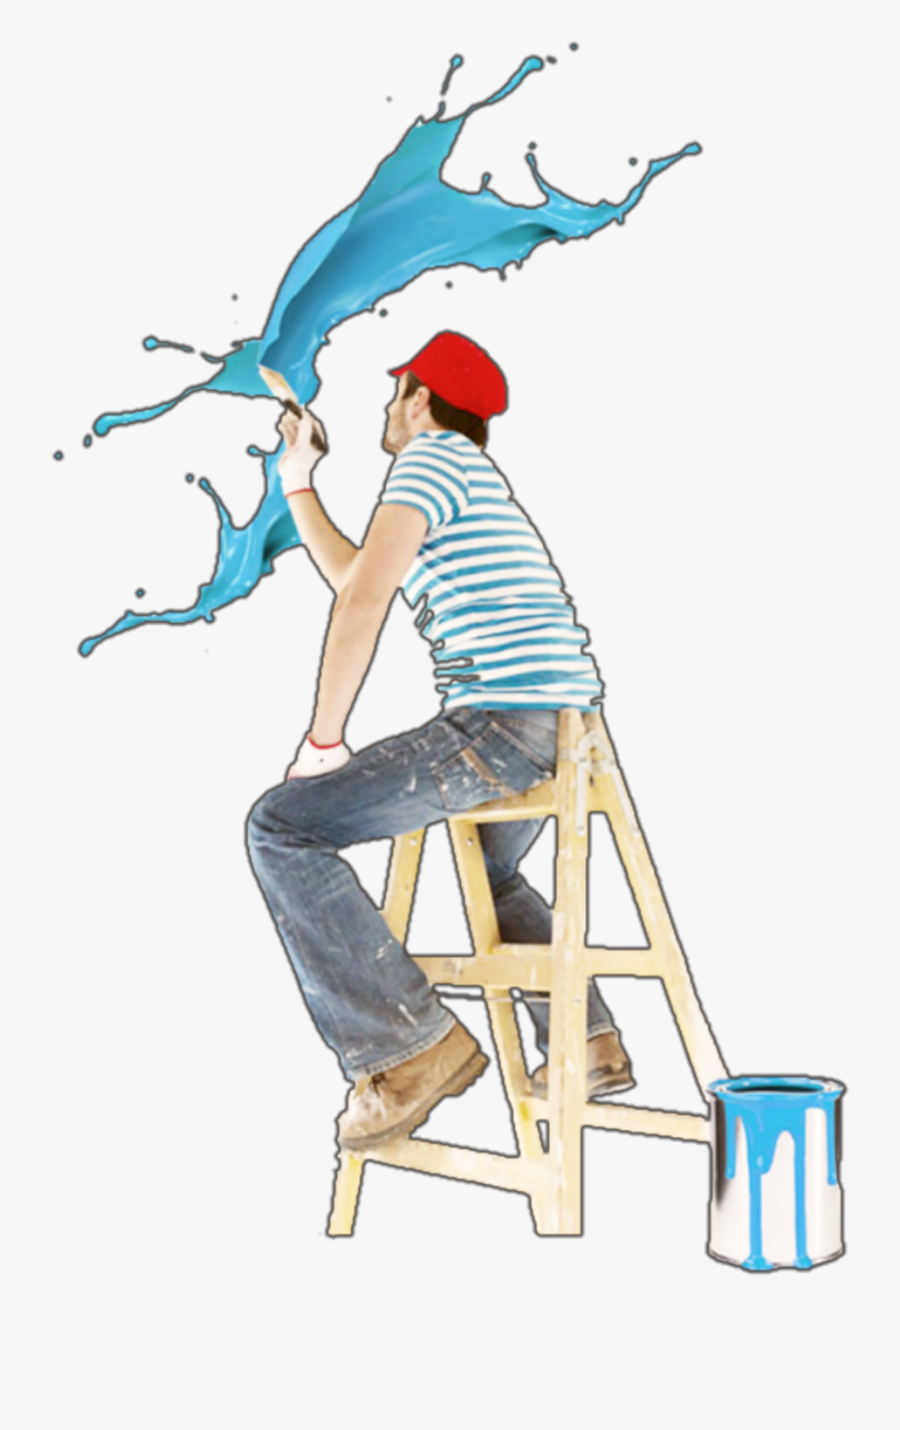 # Painter #ladder #surreal - Man Painter On Ladder Png, Transparent Clipart